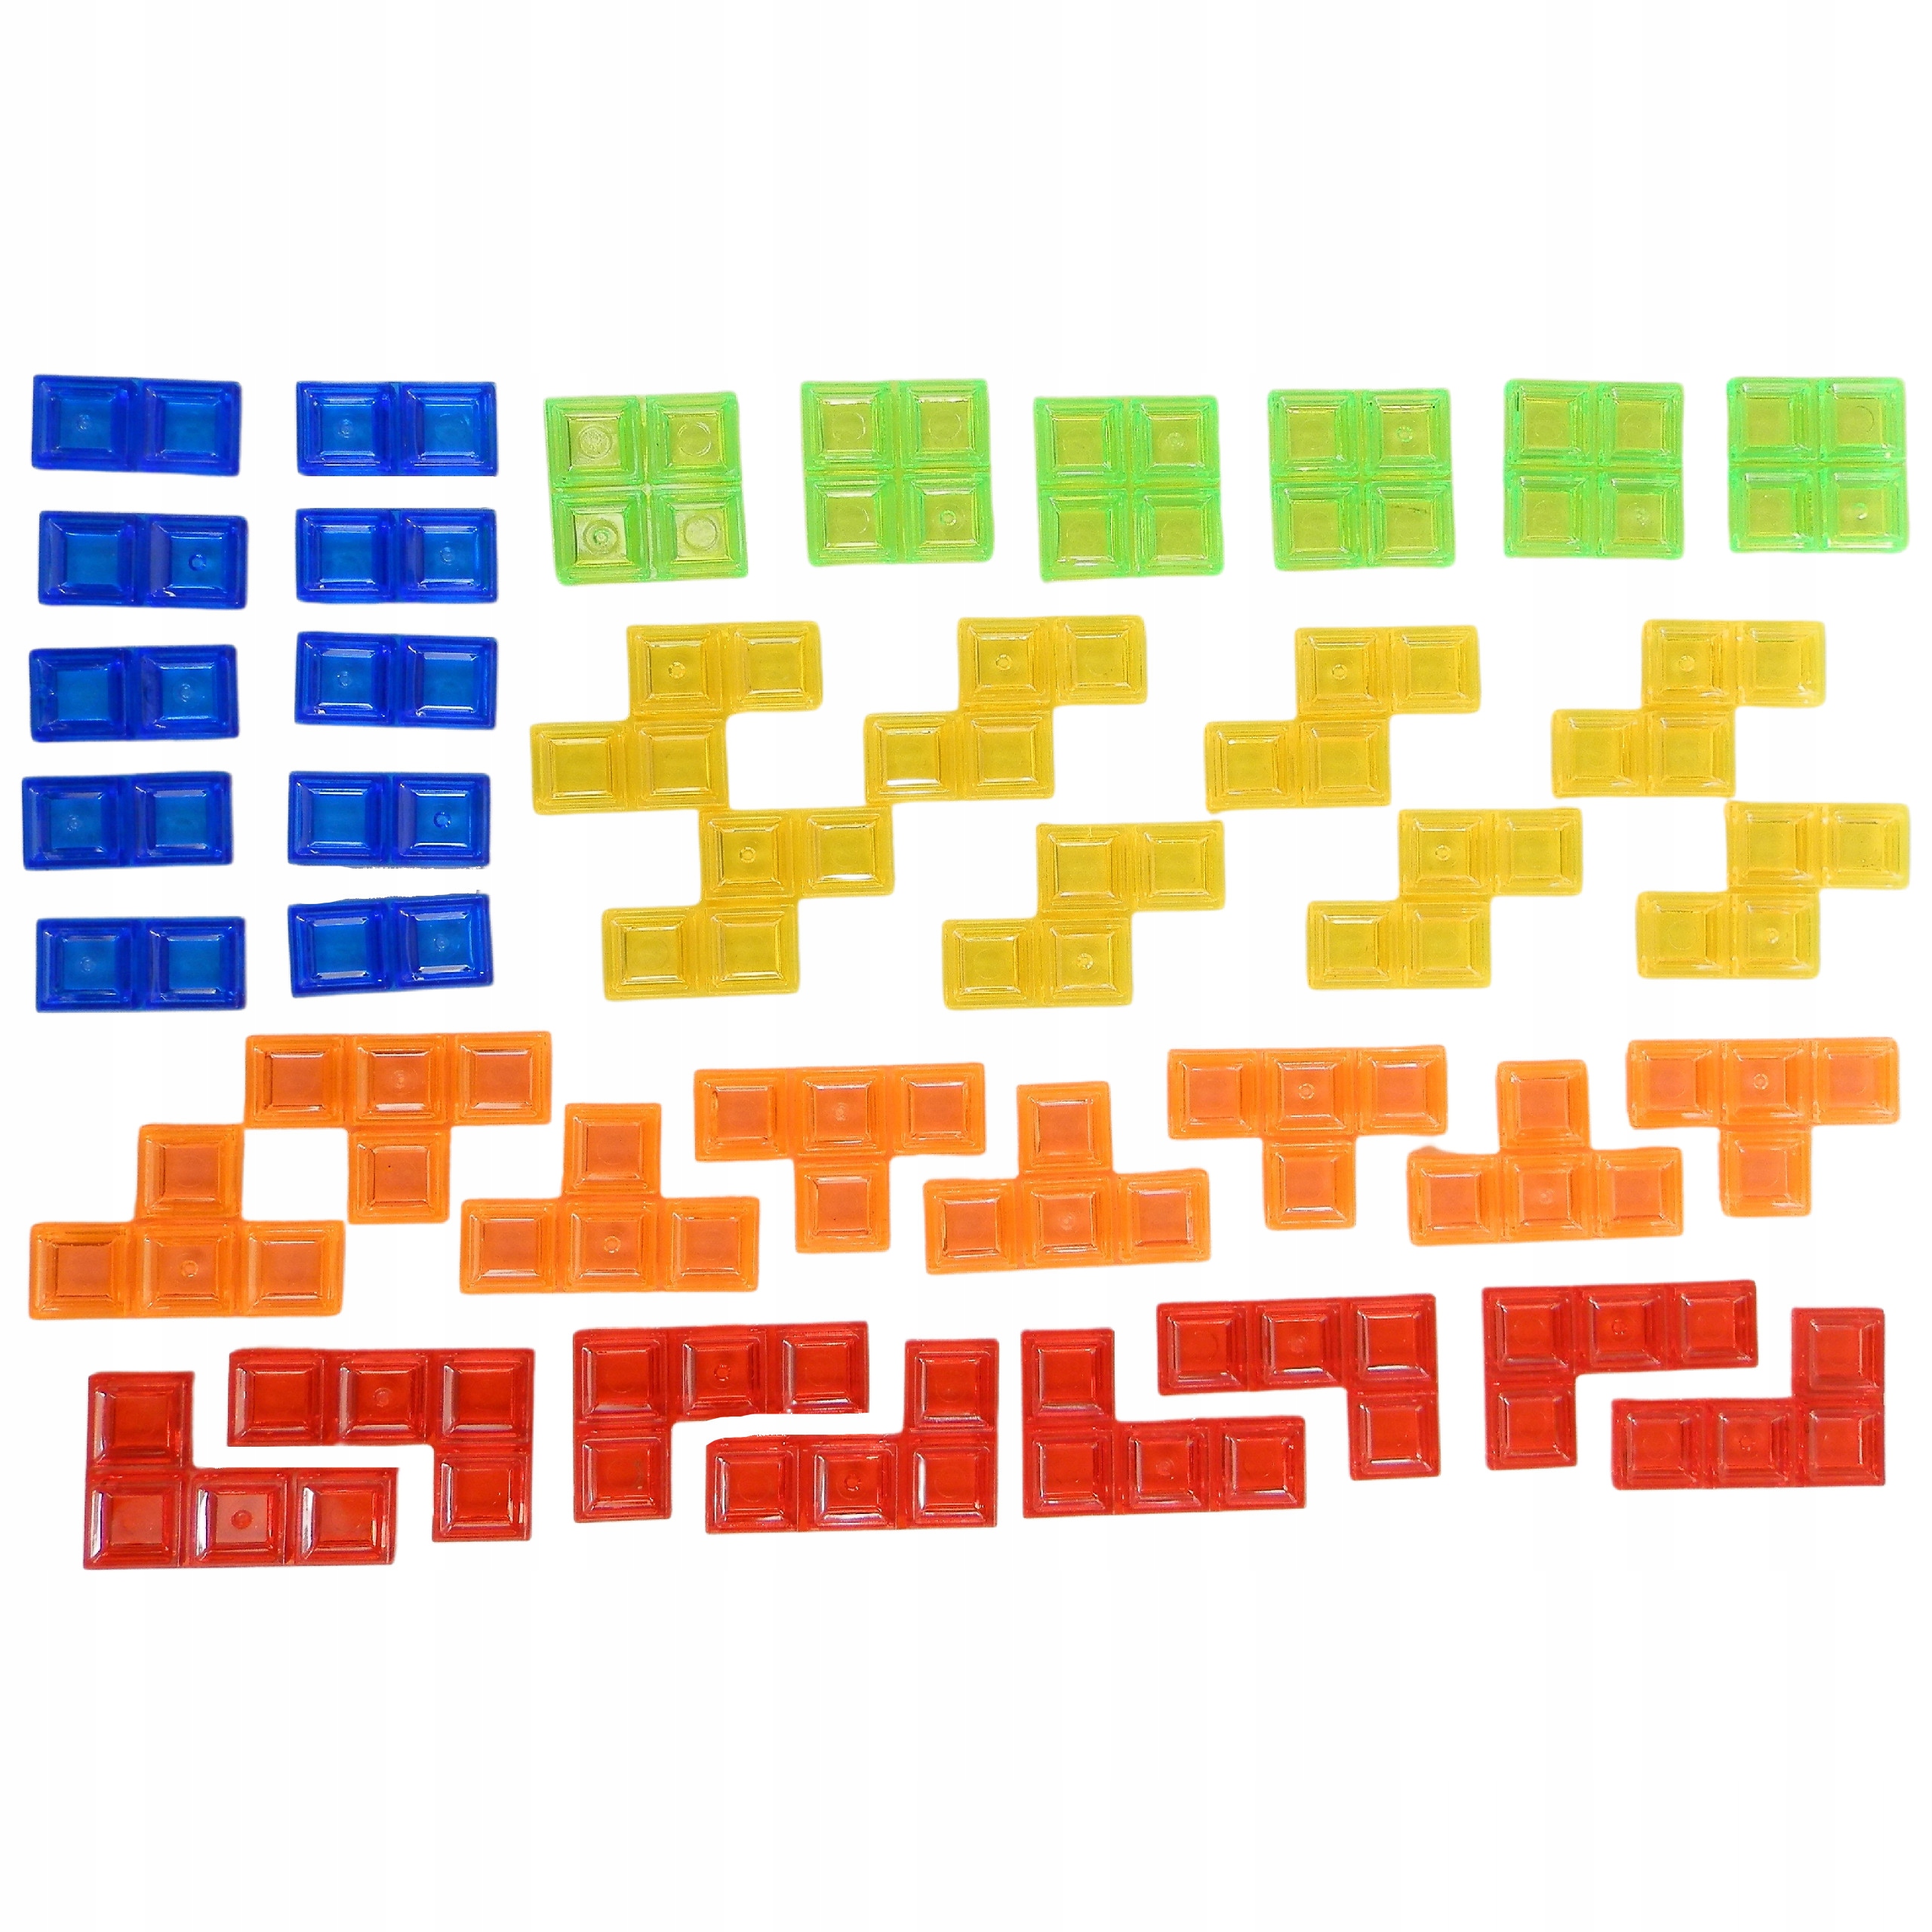 Projektor do rysowania stolik jednorożec tetris 5N Materiał plastik